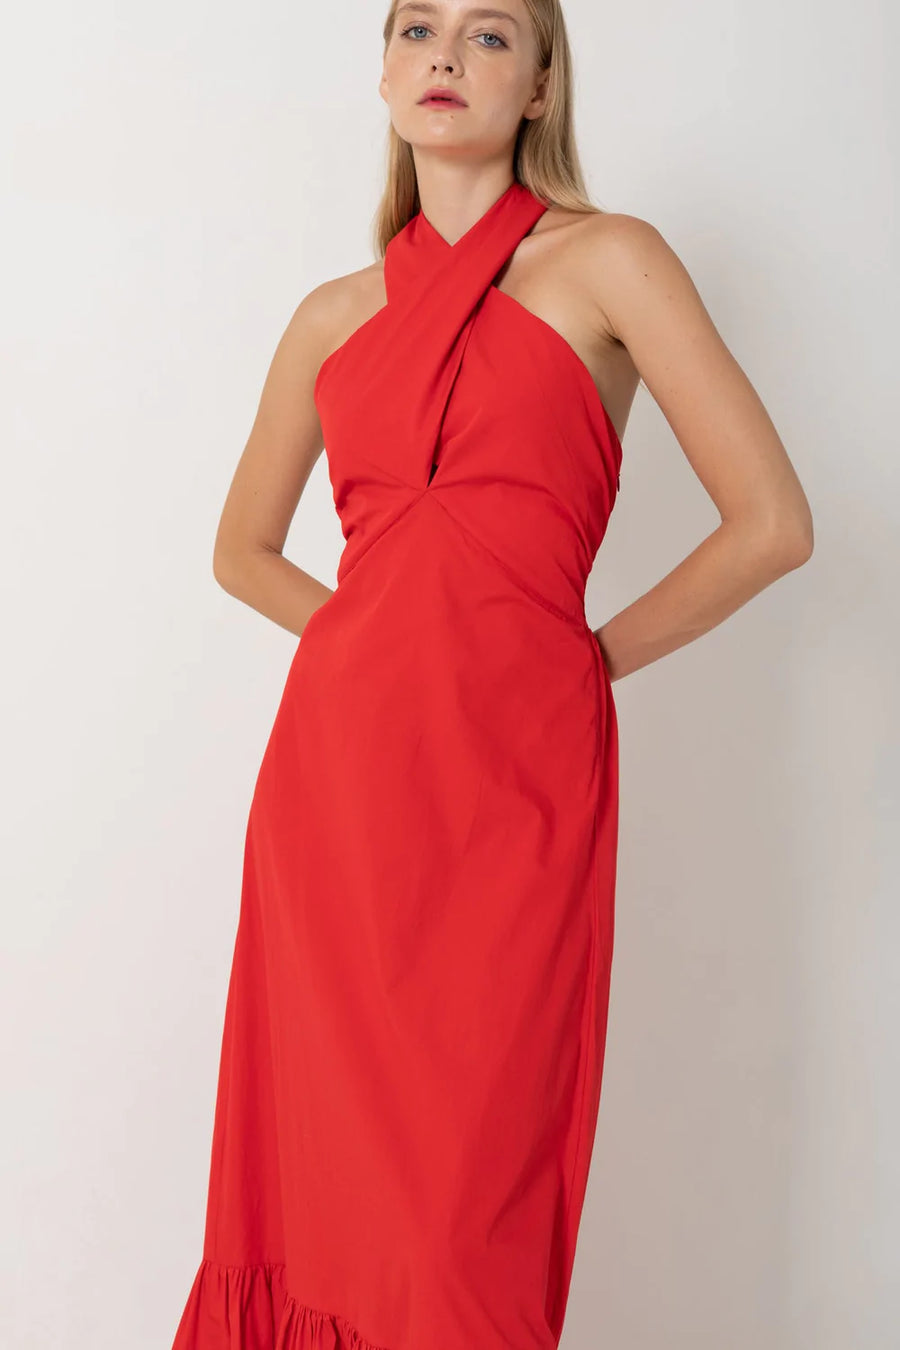 S/W/F Boutique - Crossover Halter Maxi Dress - Rose